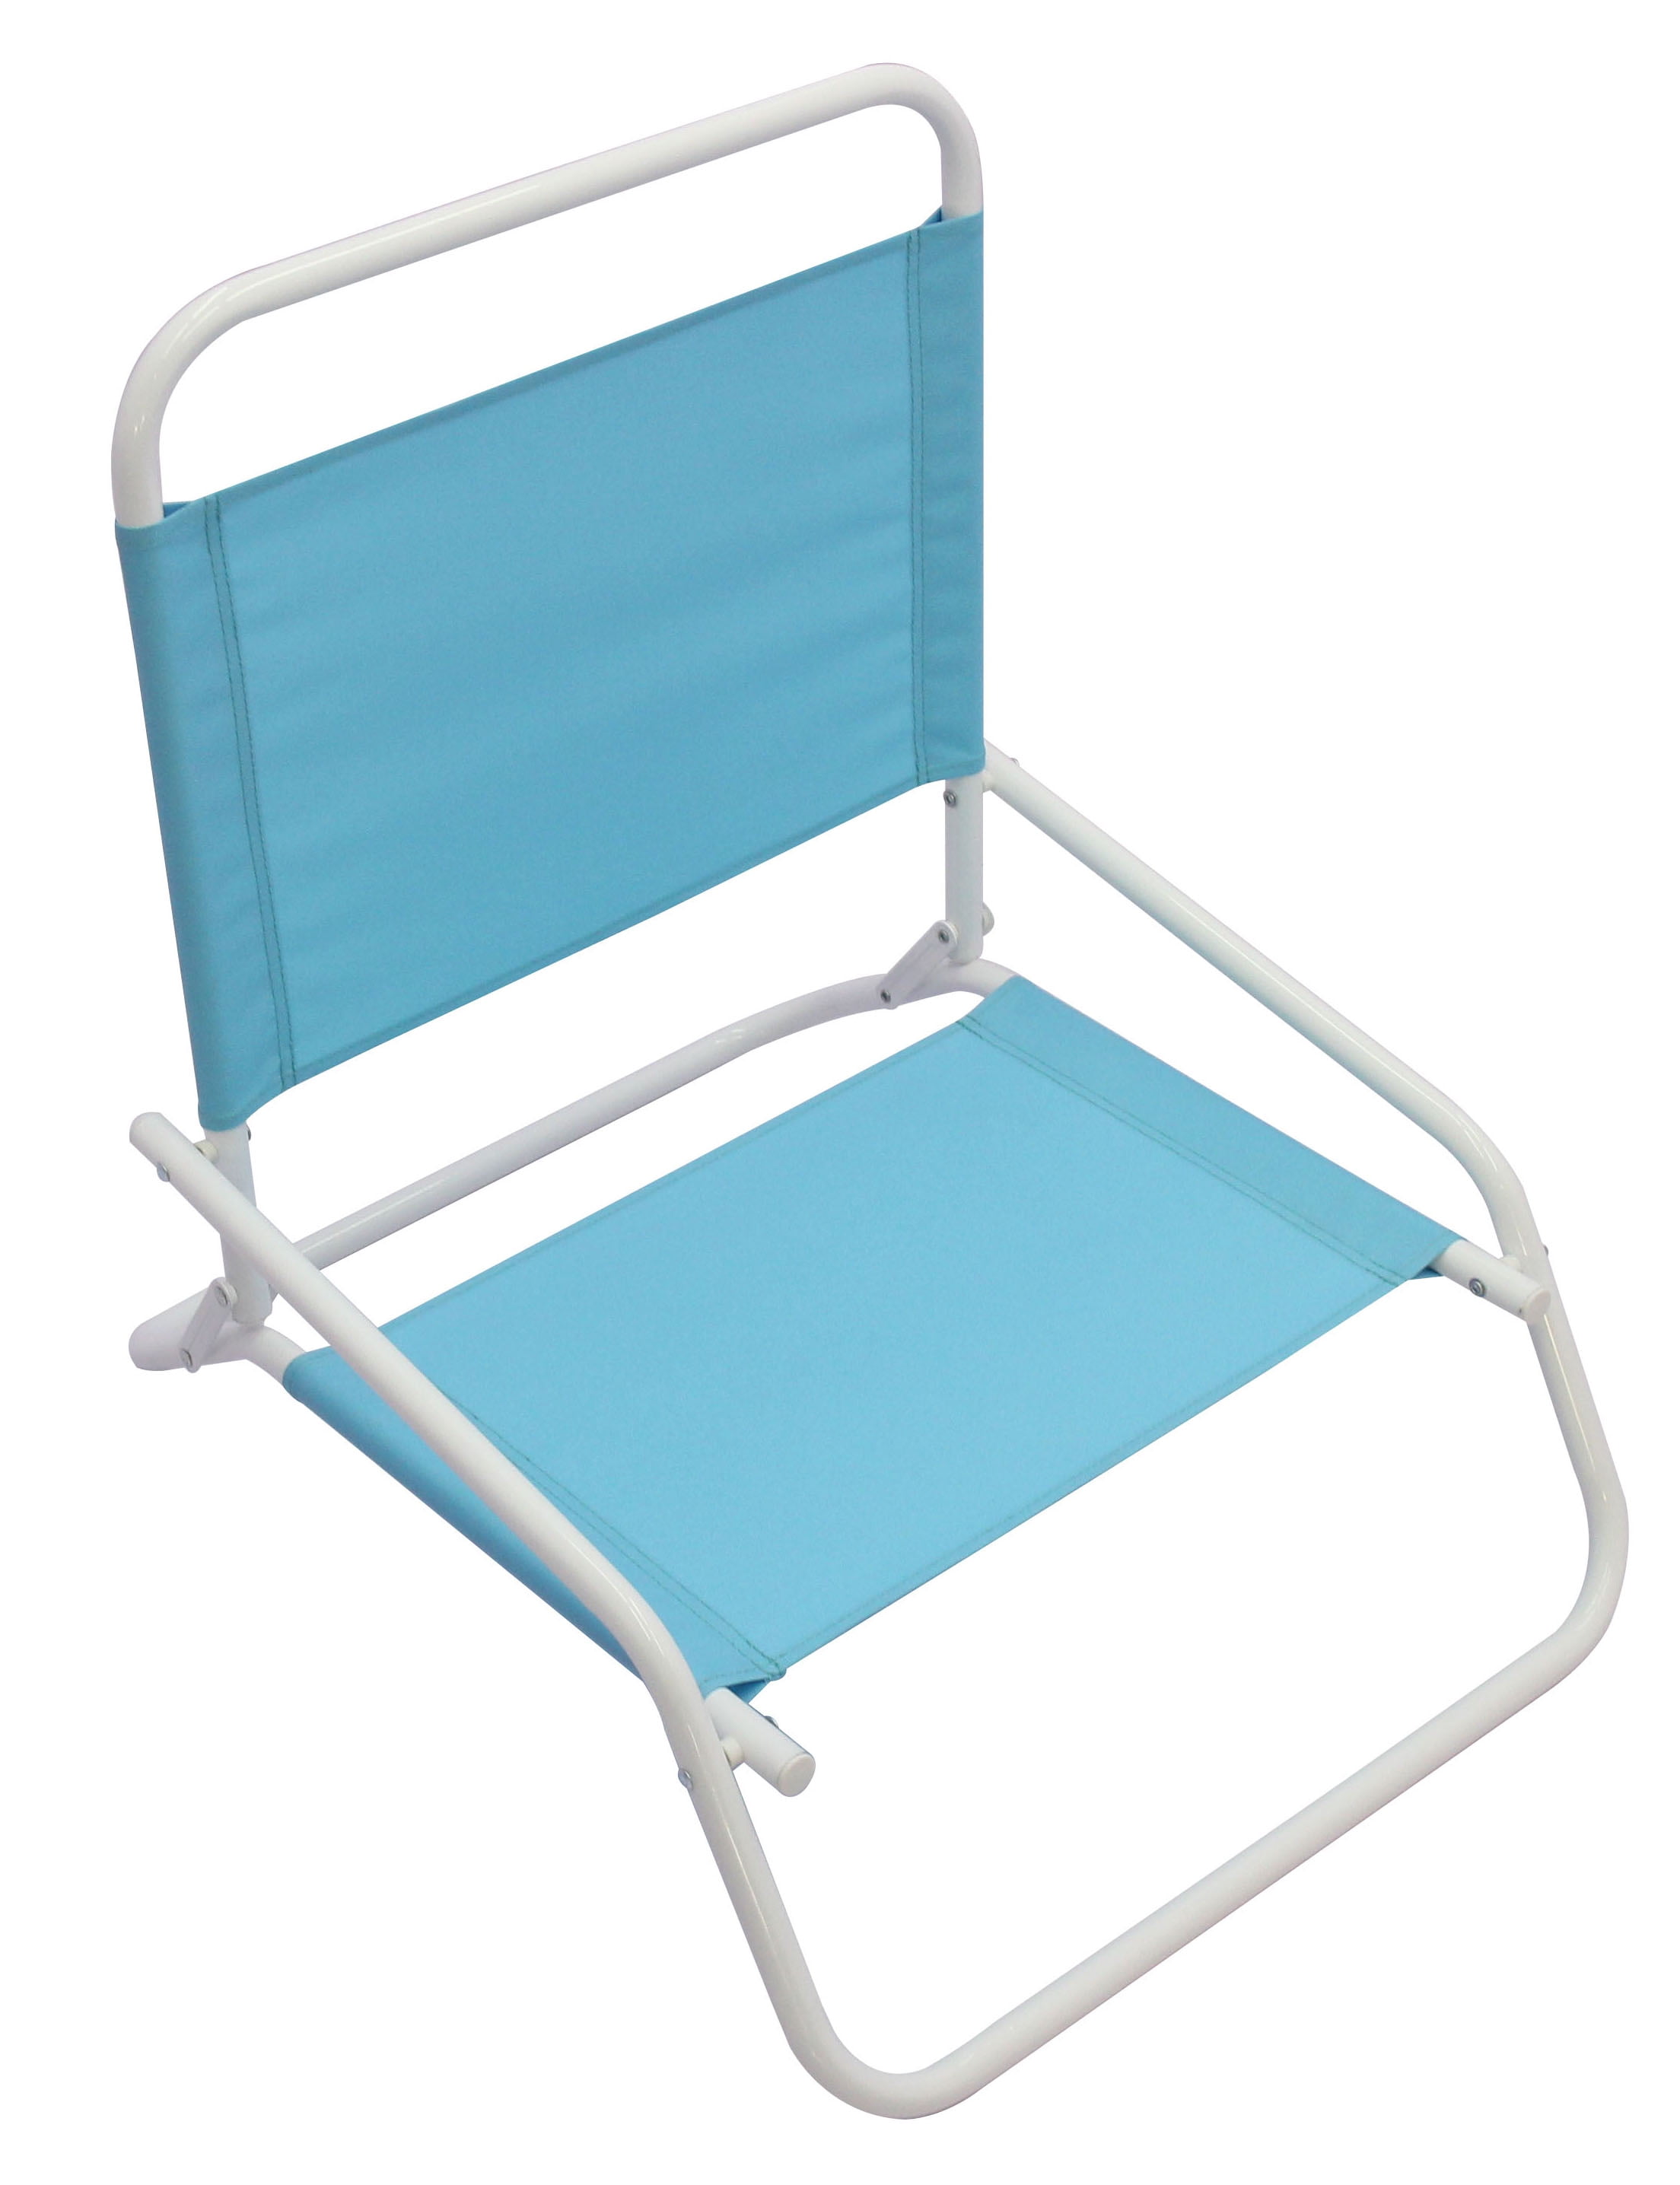 Minimalist One Position Folding Beach Chair for Simple Design